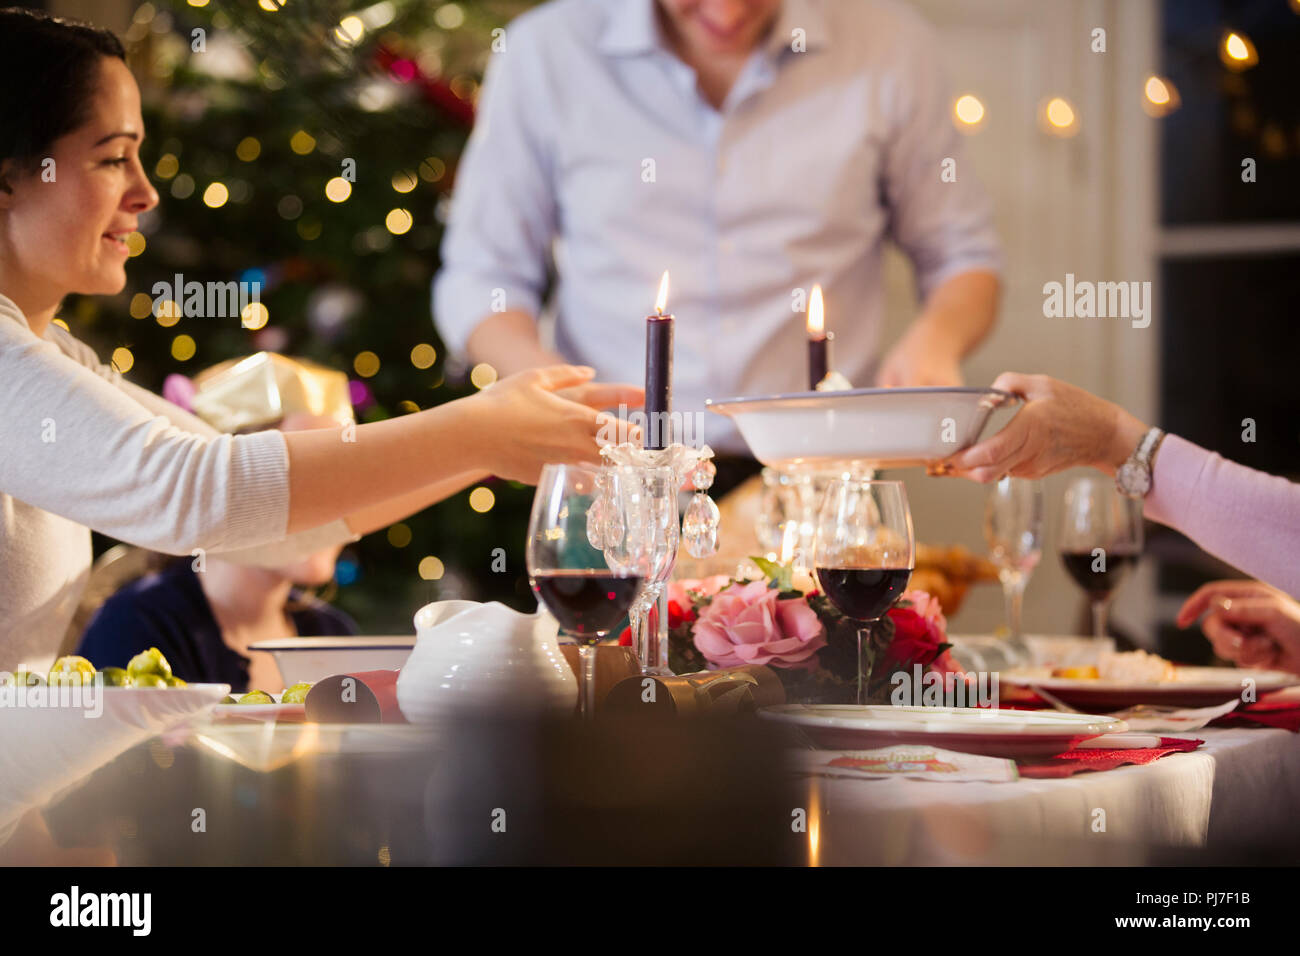 Family passing food, enjoying candlelight Christmas dinner Stock Photo